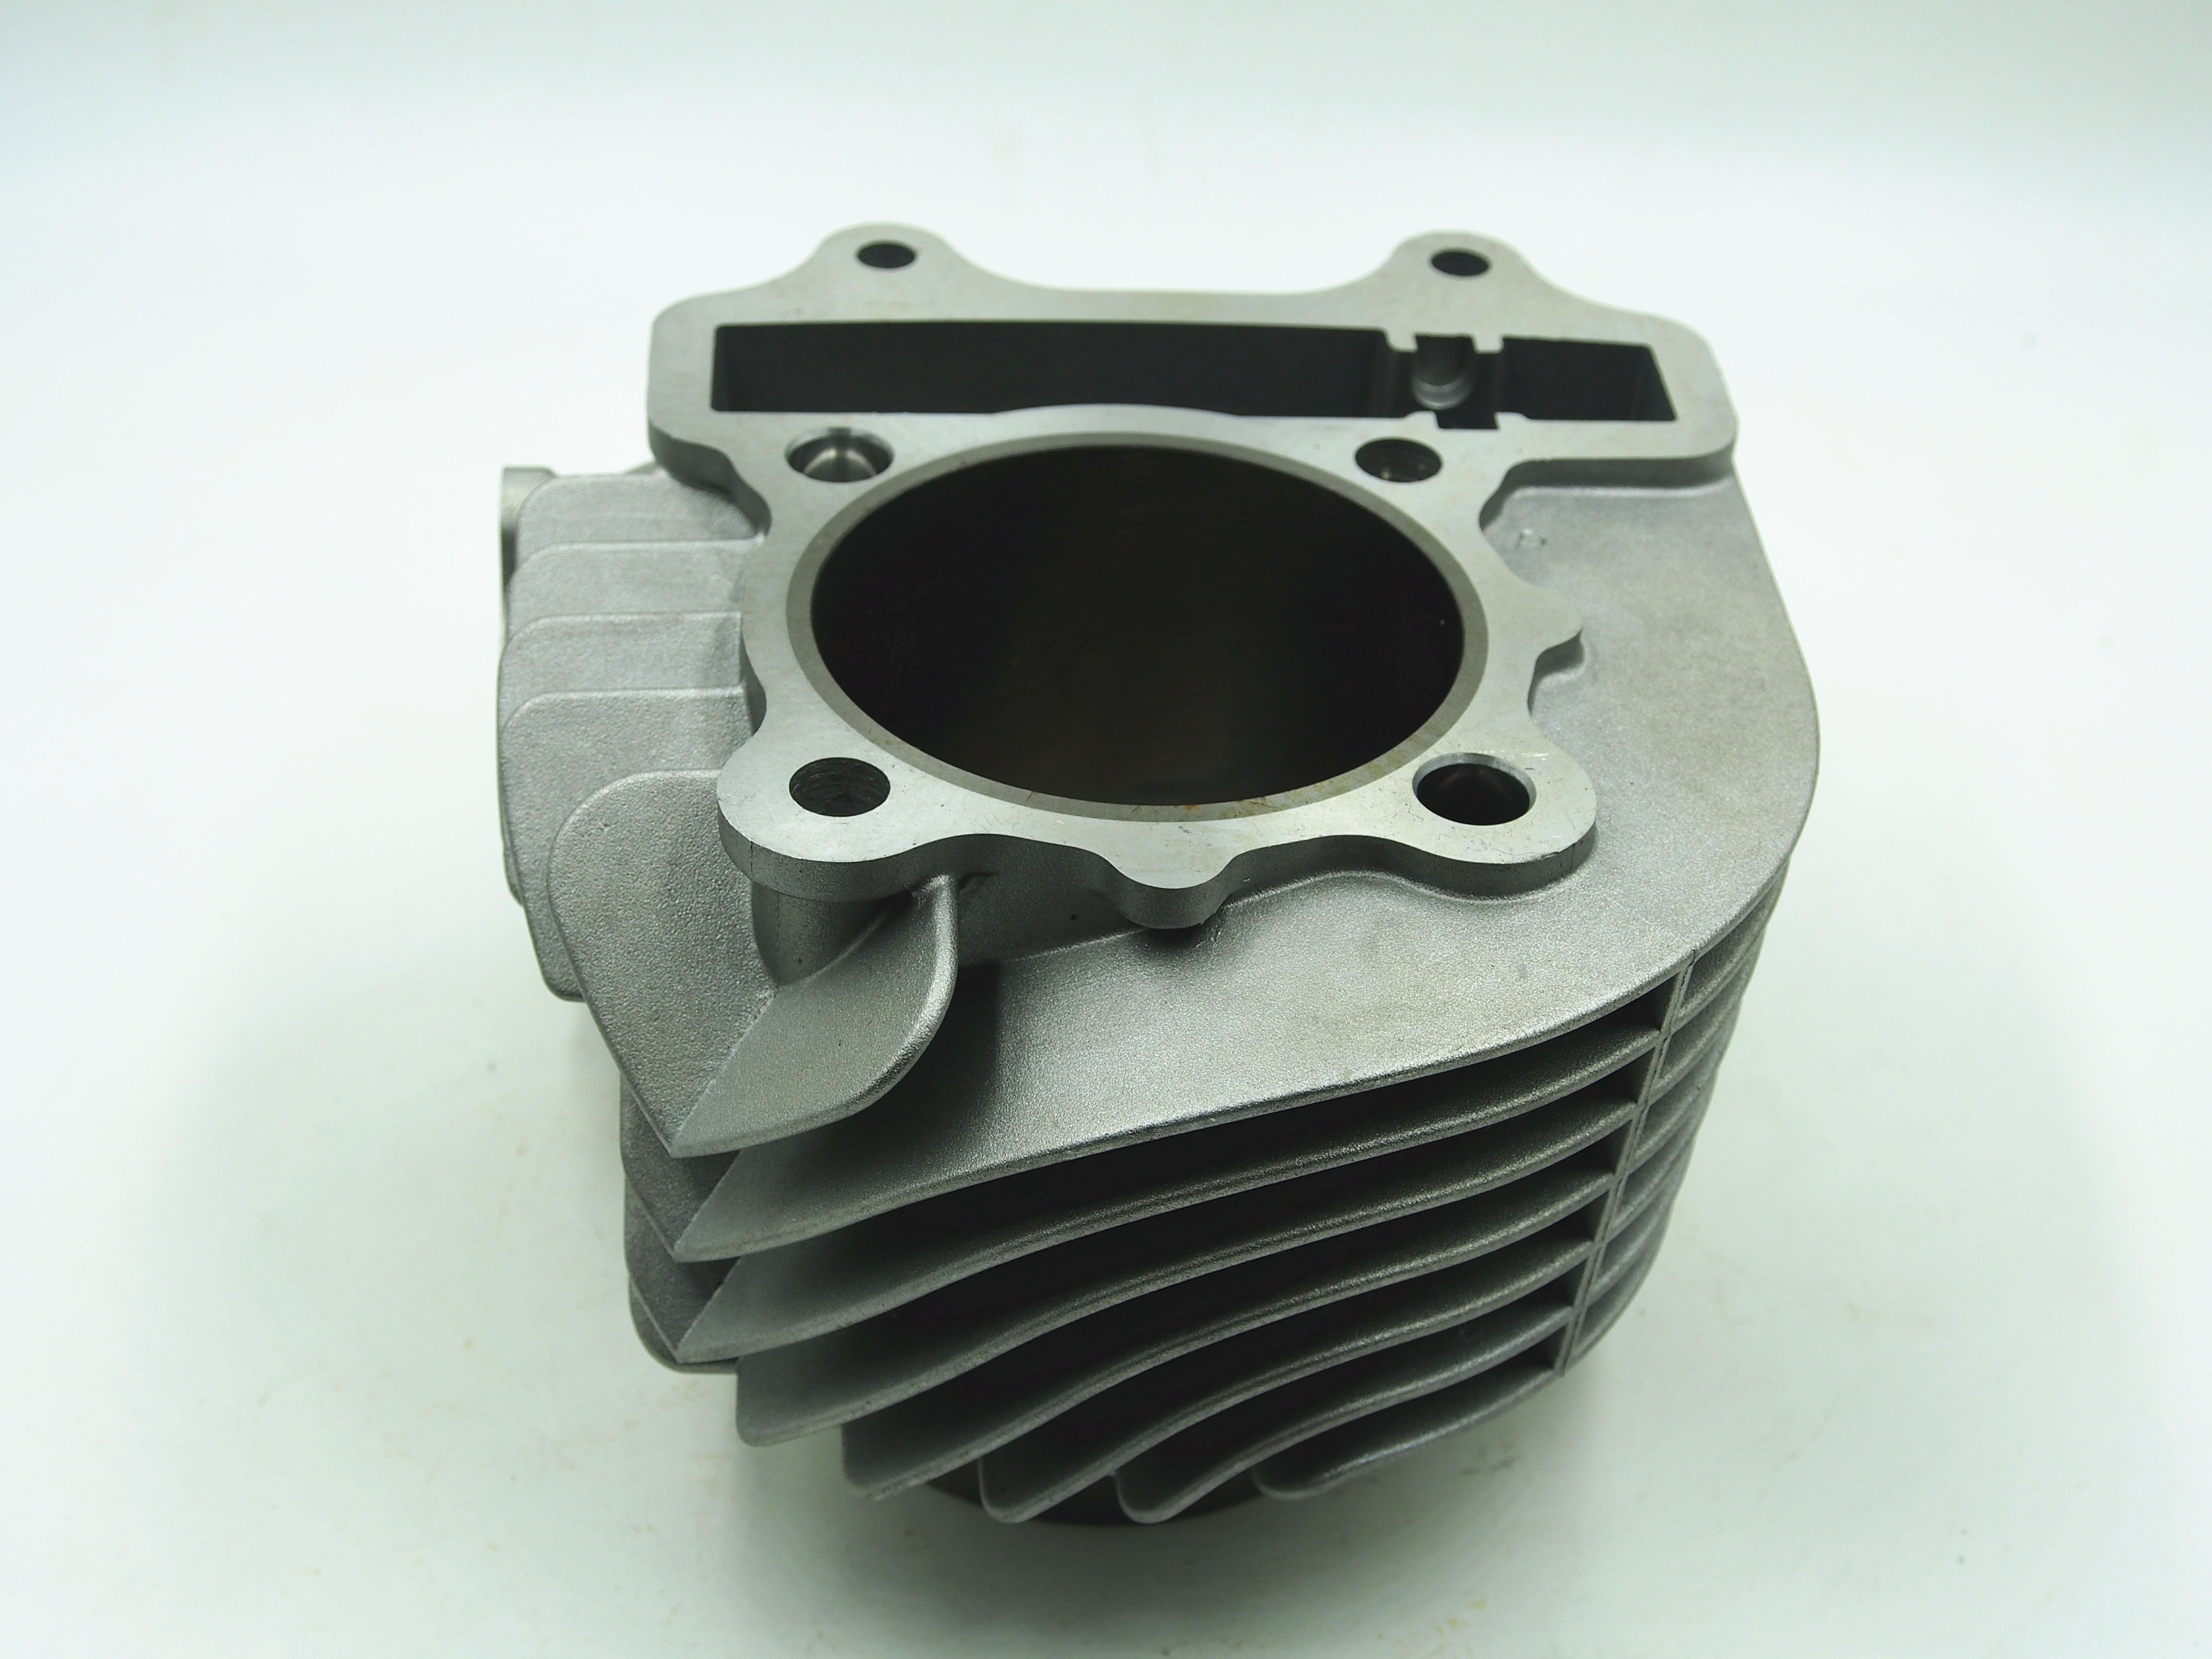 Wuyang Aluminum Honda Engine Block 150 For Motorcycle Accessories